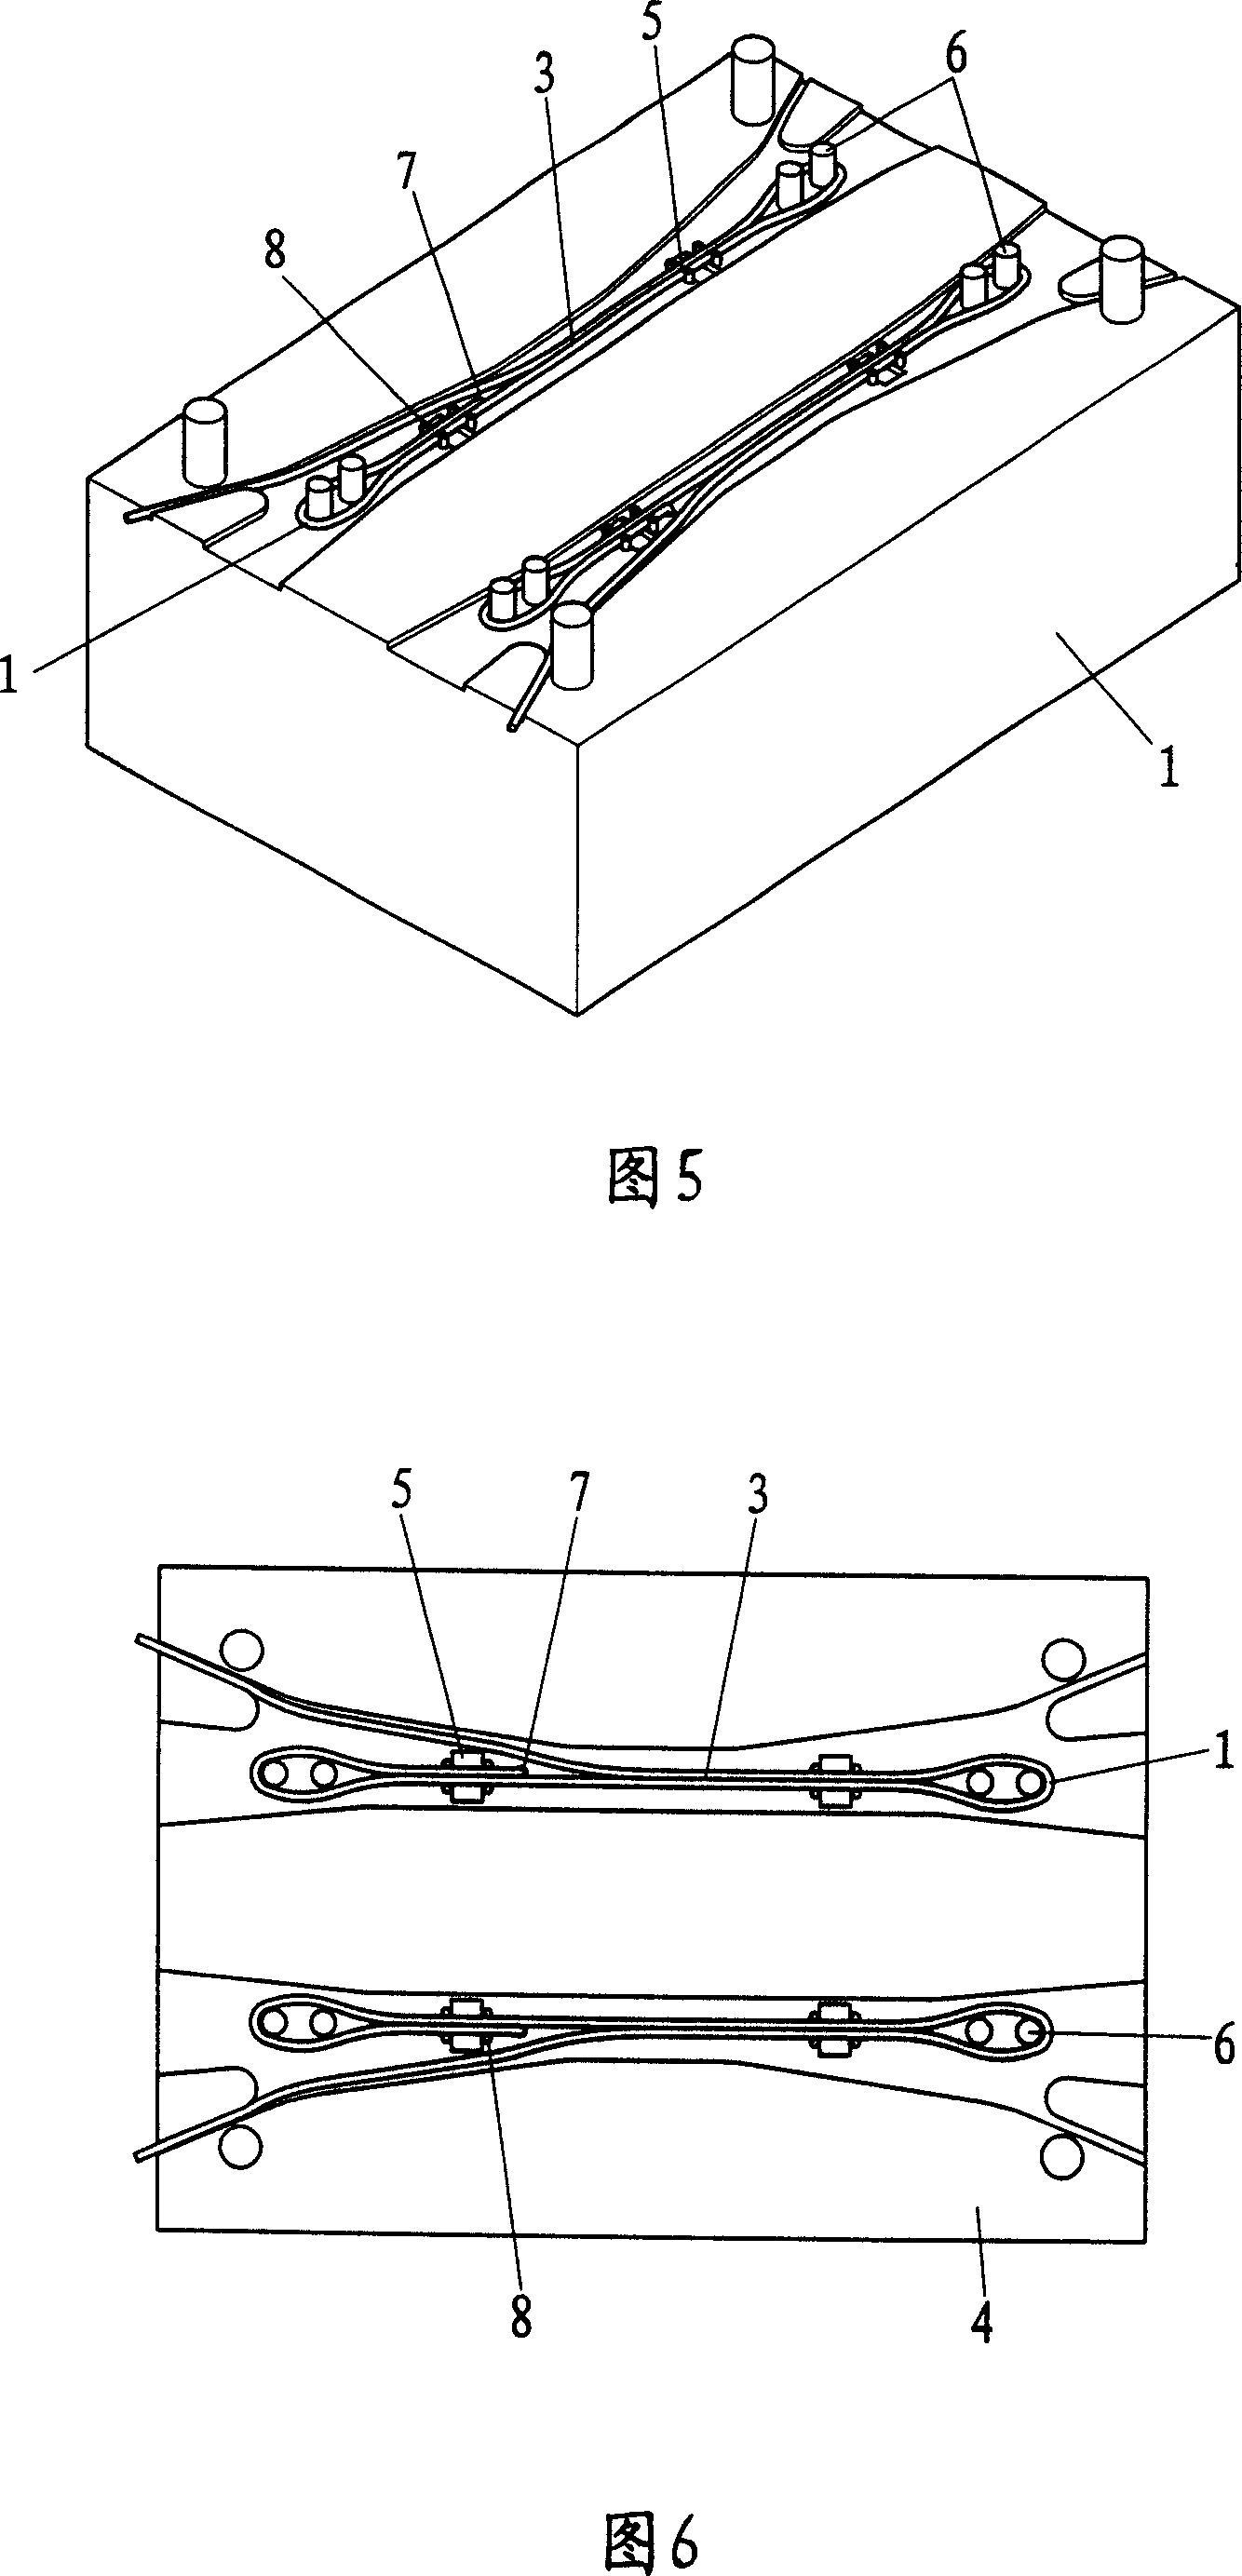 Rope fastener injecting method